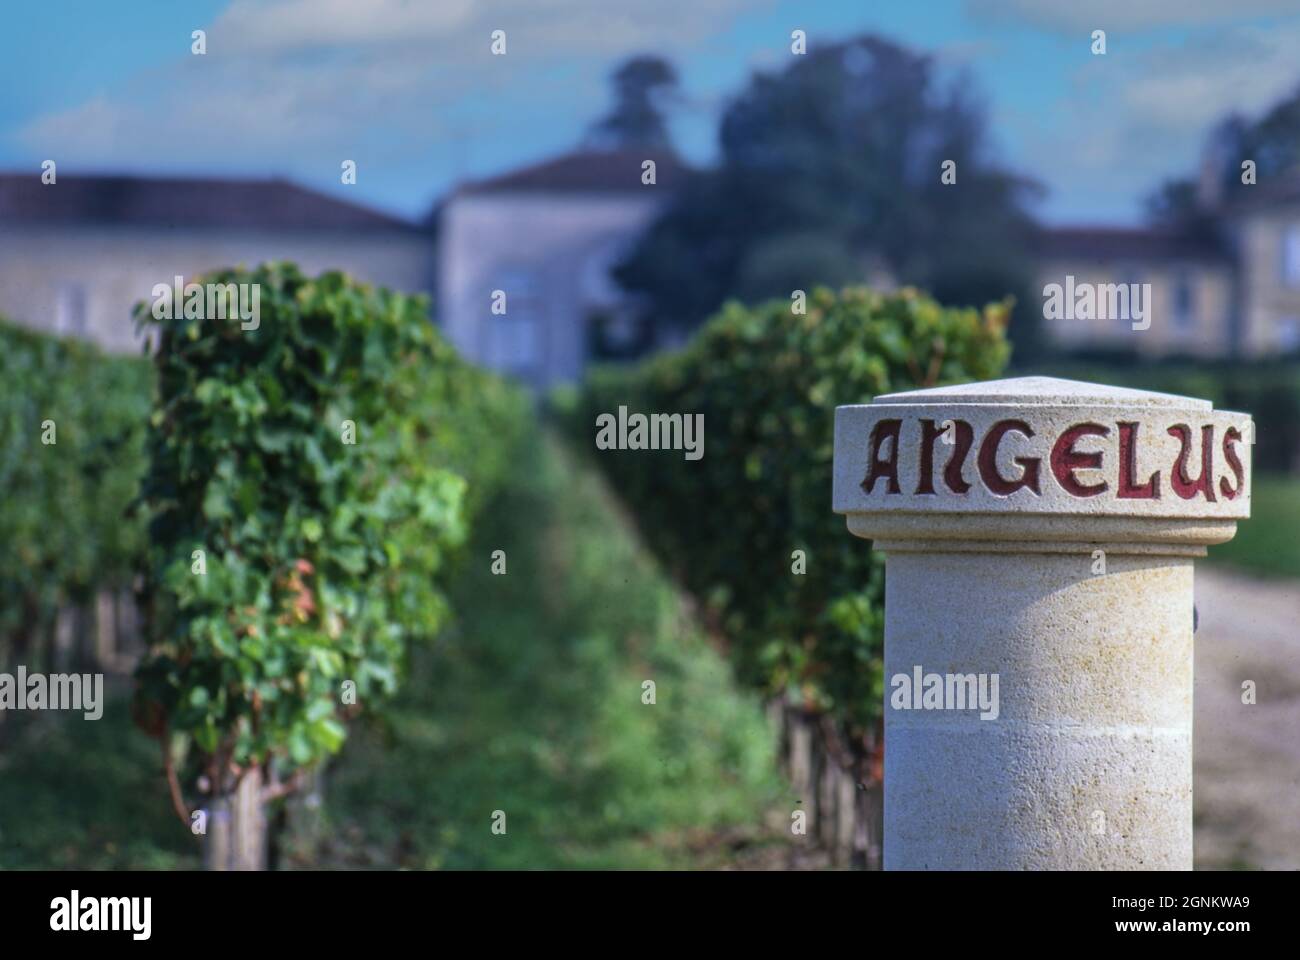 CHATEAU ANGELUS VIGNA pietra marcatore di confine nei vigneti di Chateau Angelus, Saint Emilion, Gironde, Francia. Foto Stock